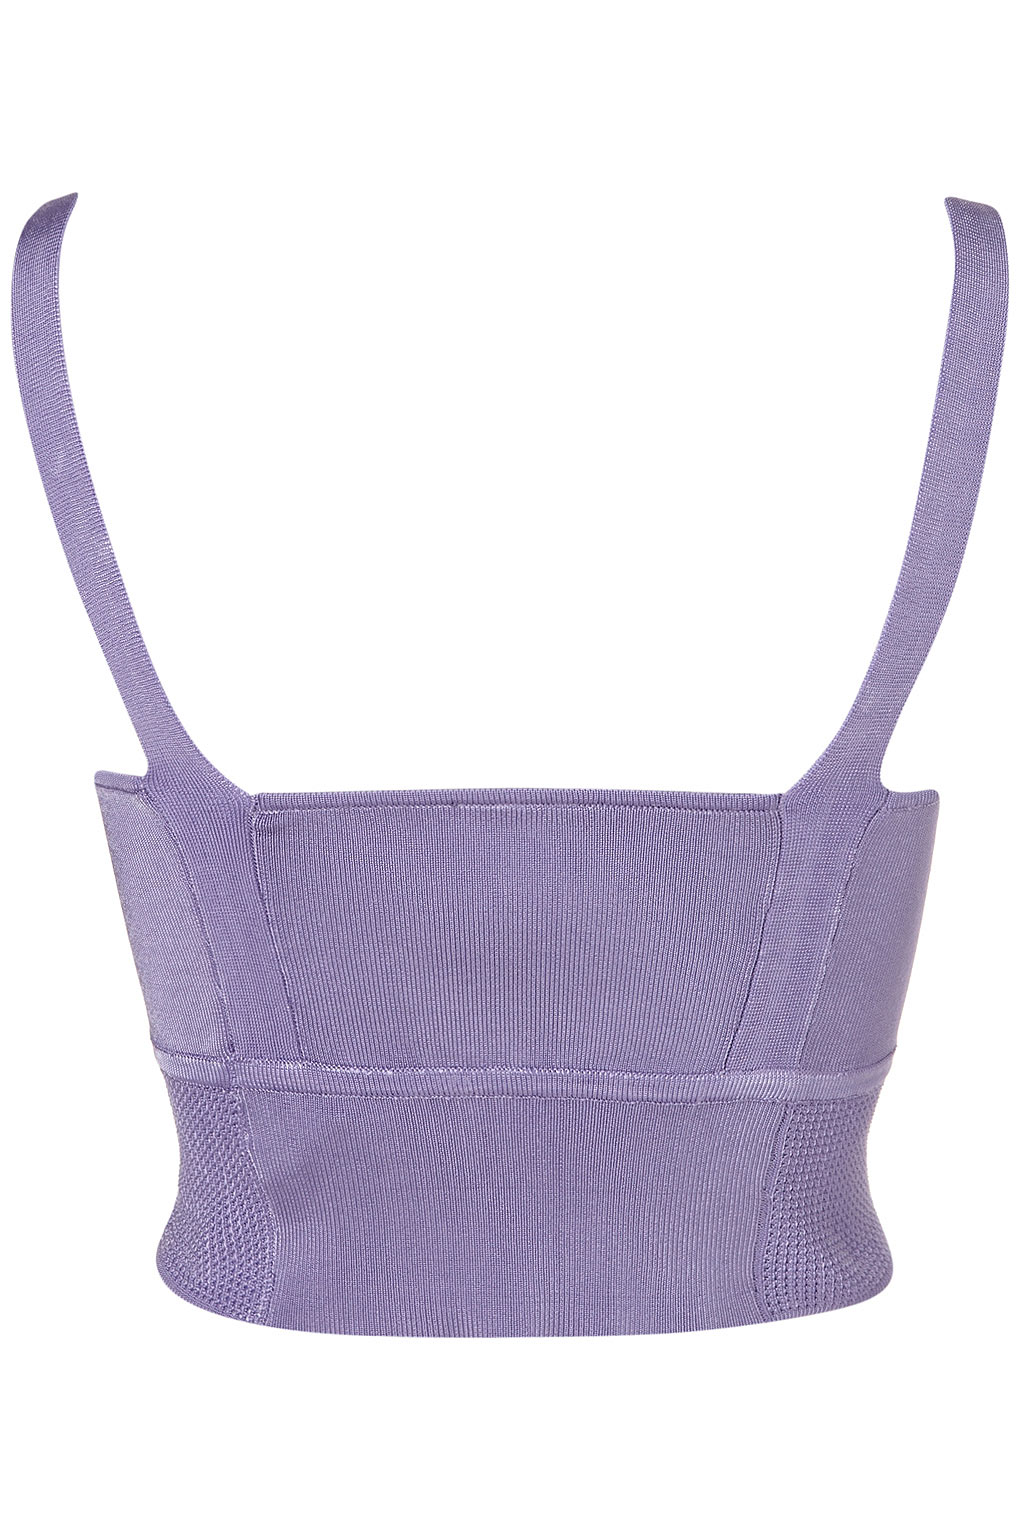 Topshop Knitted Bra Crop Top in Purple | Lyst